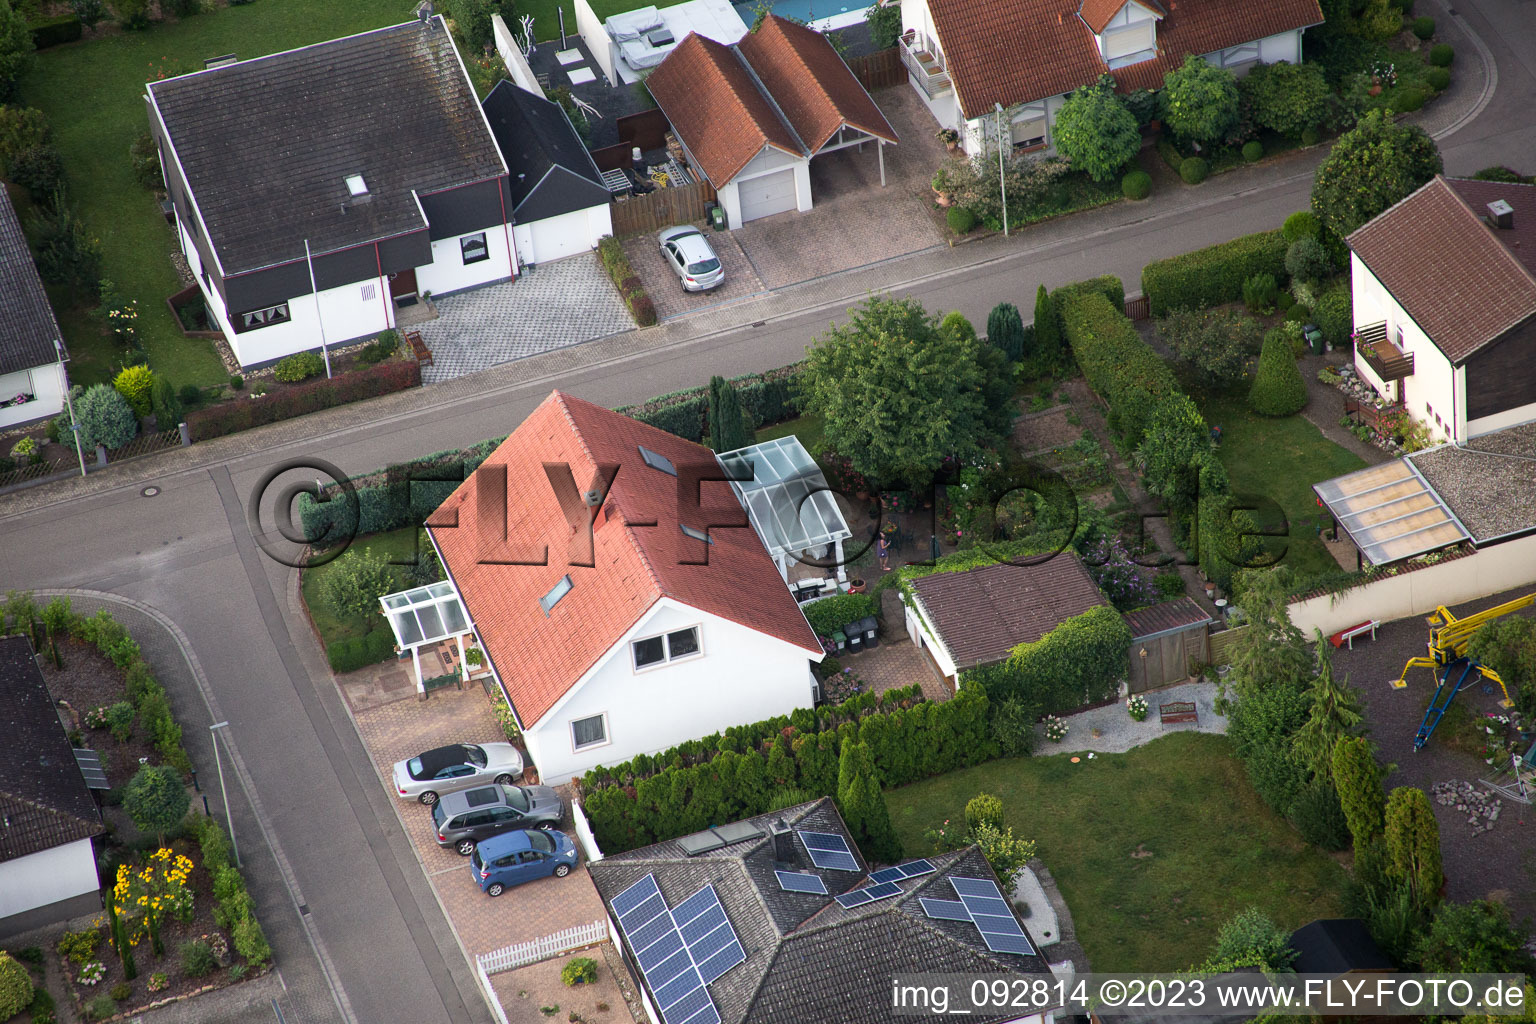 Maxburgstr in the district Billigheim in Billigheim-Ingenheim in the state Rhineland-Palatinate, Germany from a drone